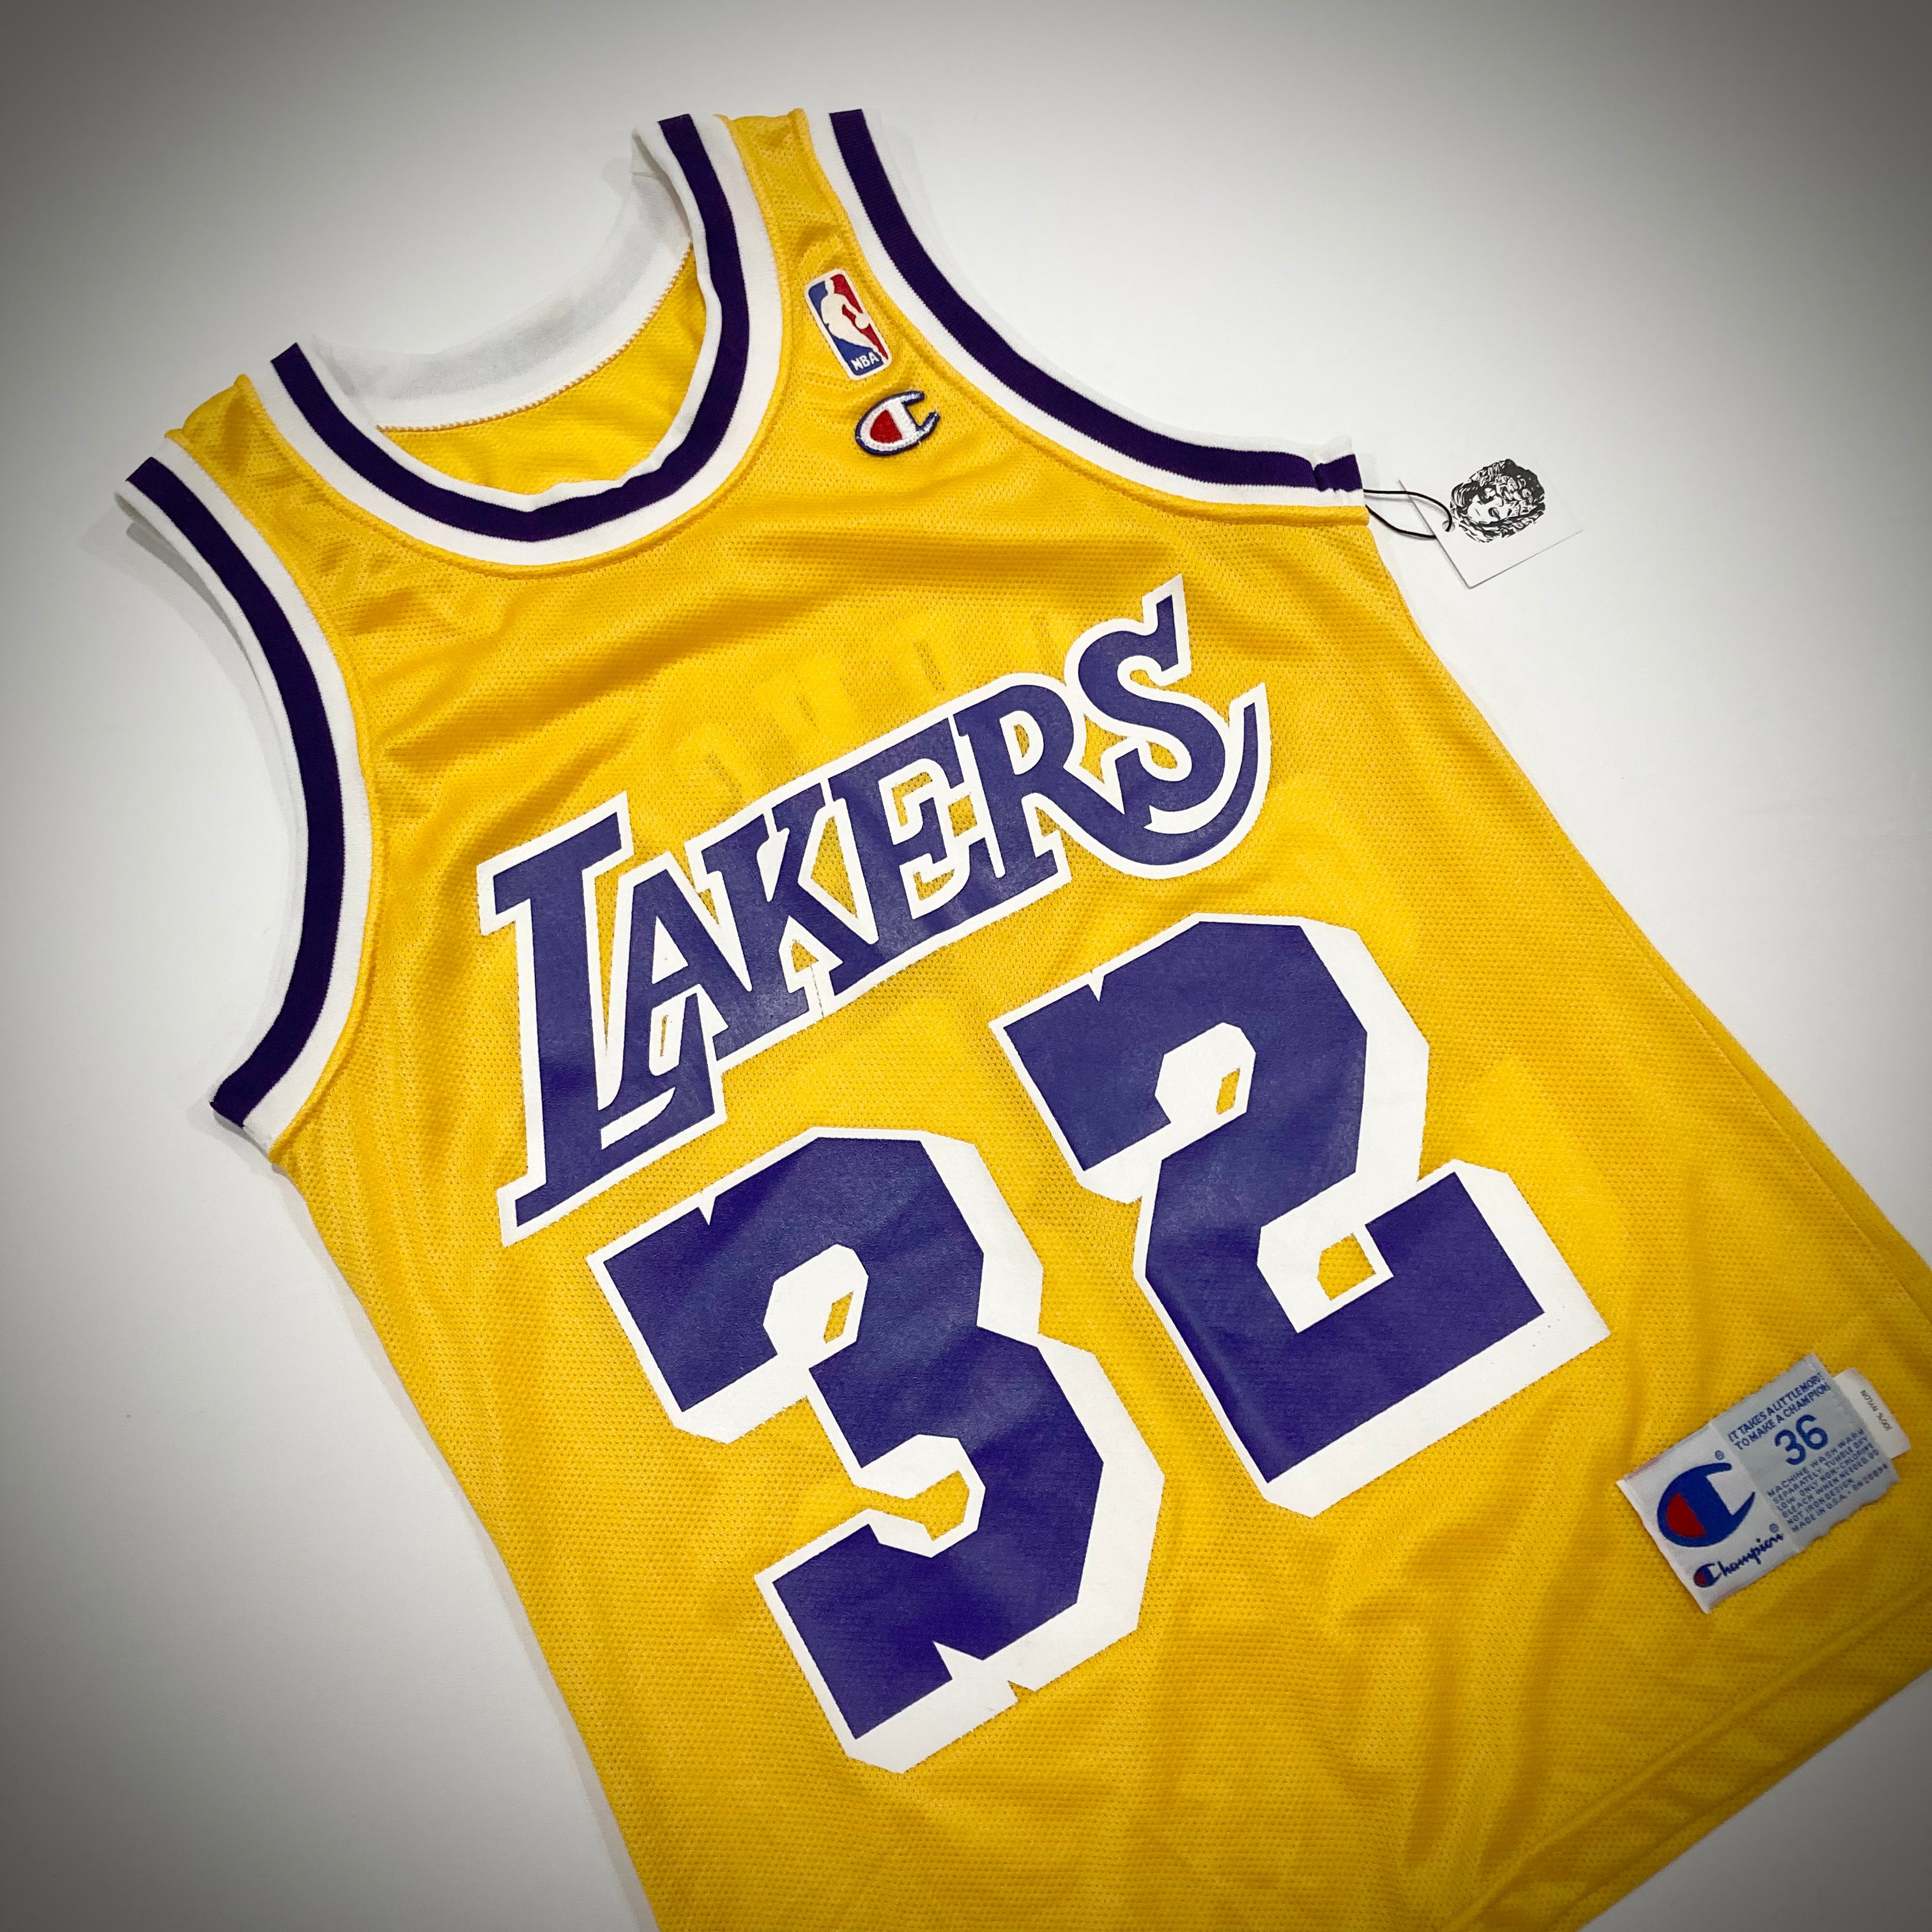 Vintage Los Angeles Lakers Magic Johnson 32 Basketball Jersey 